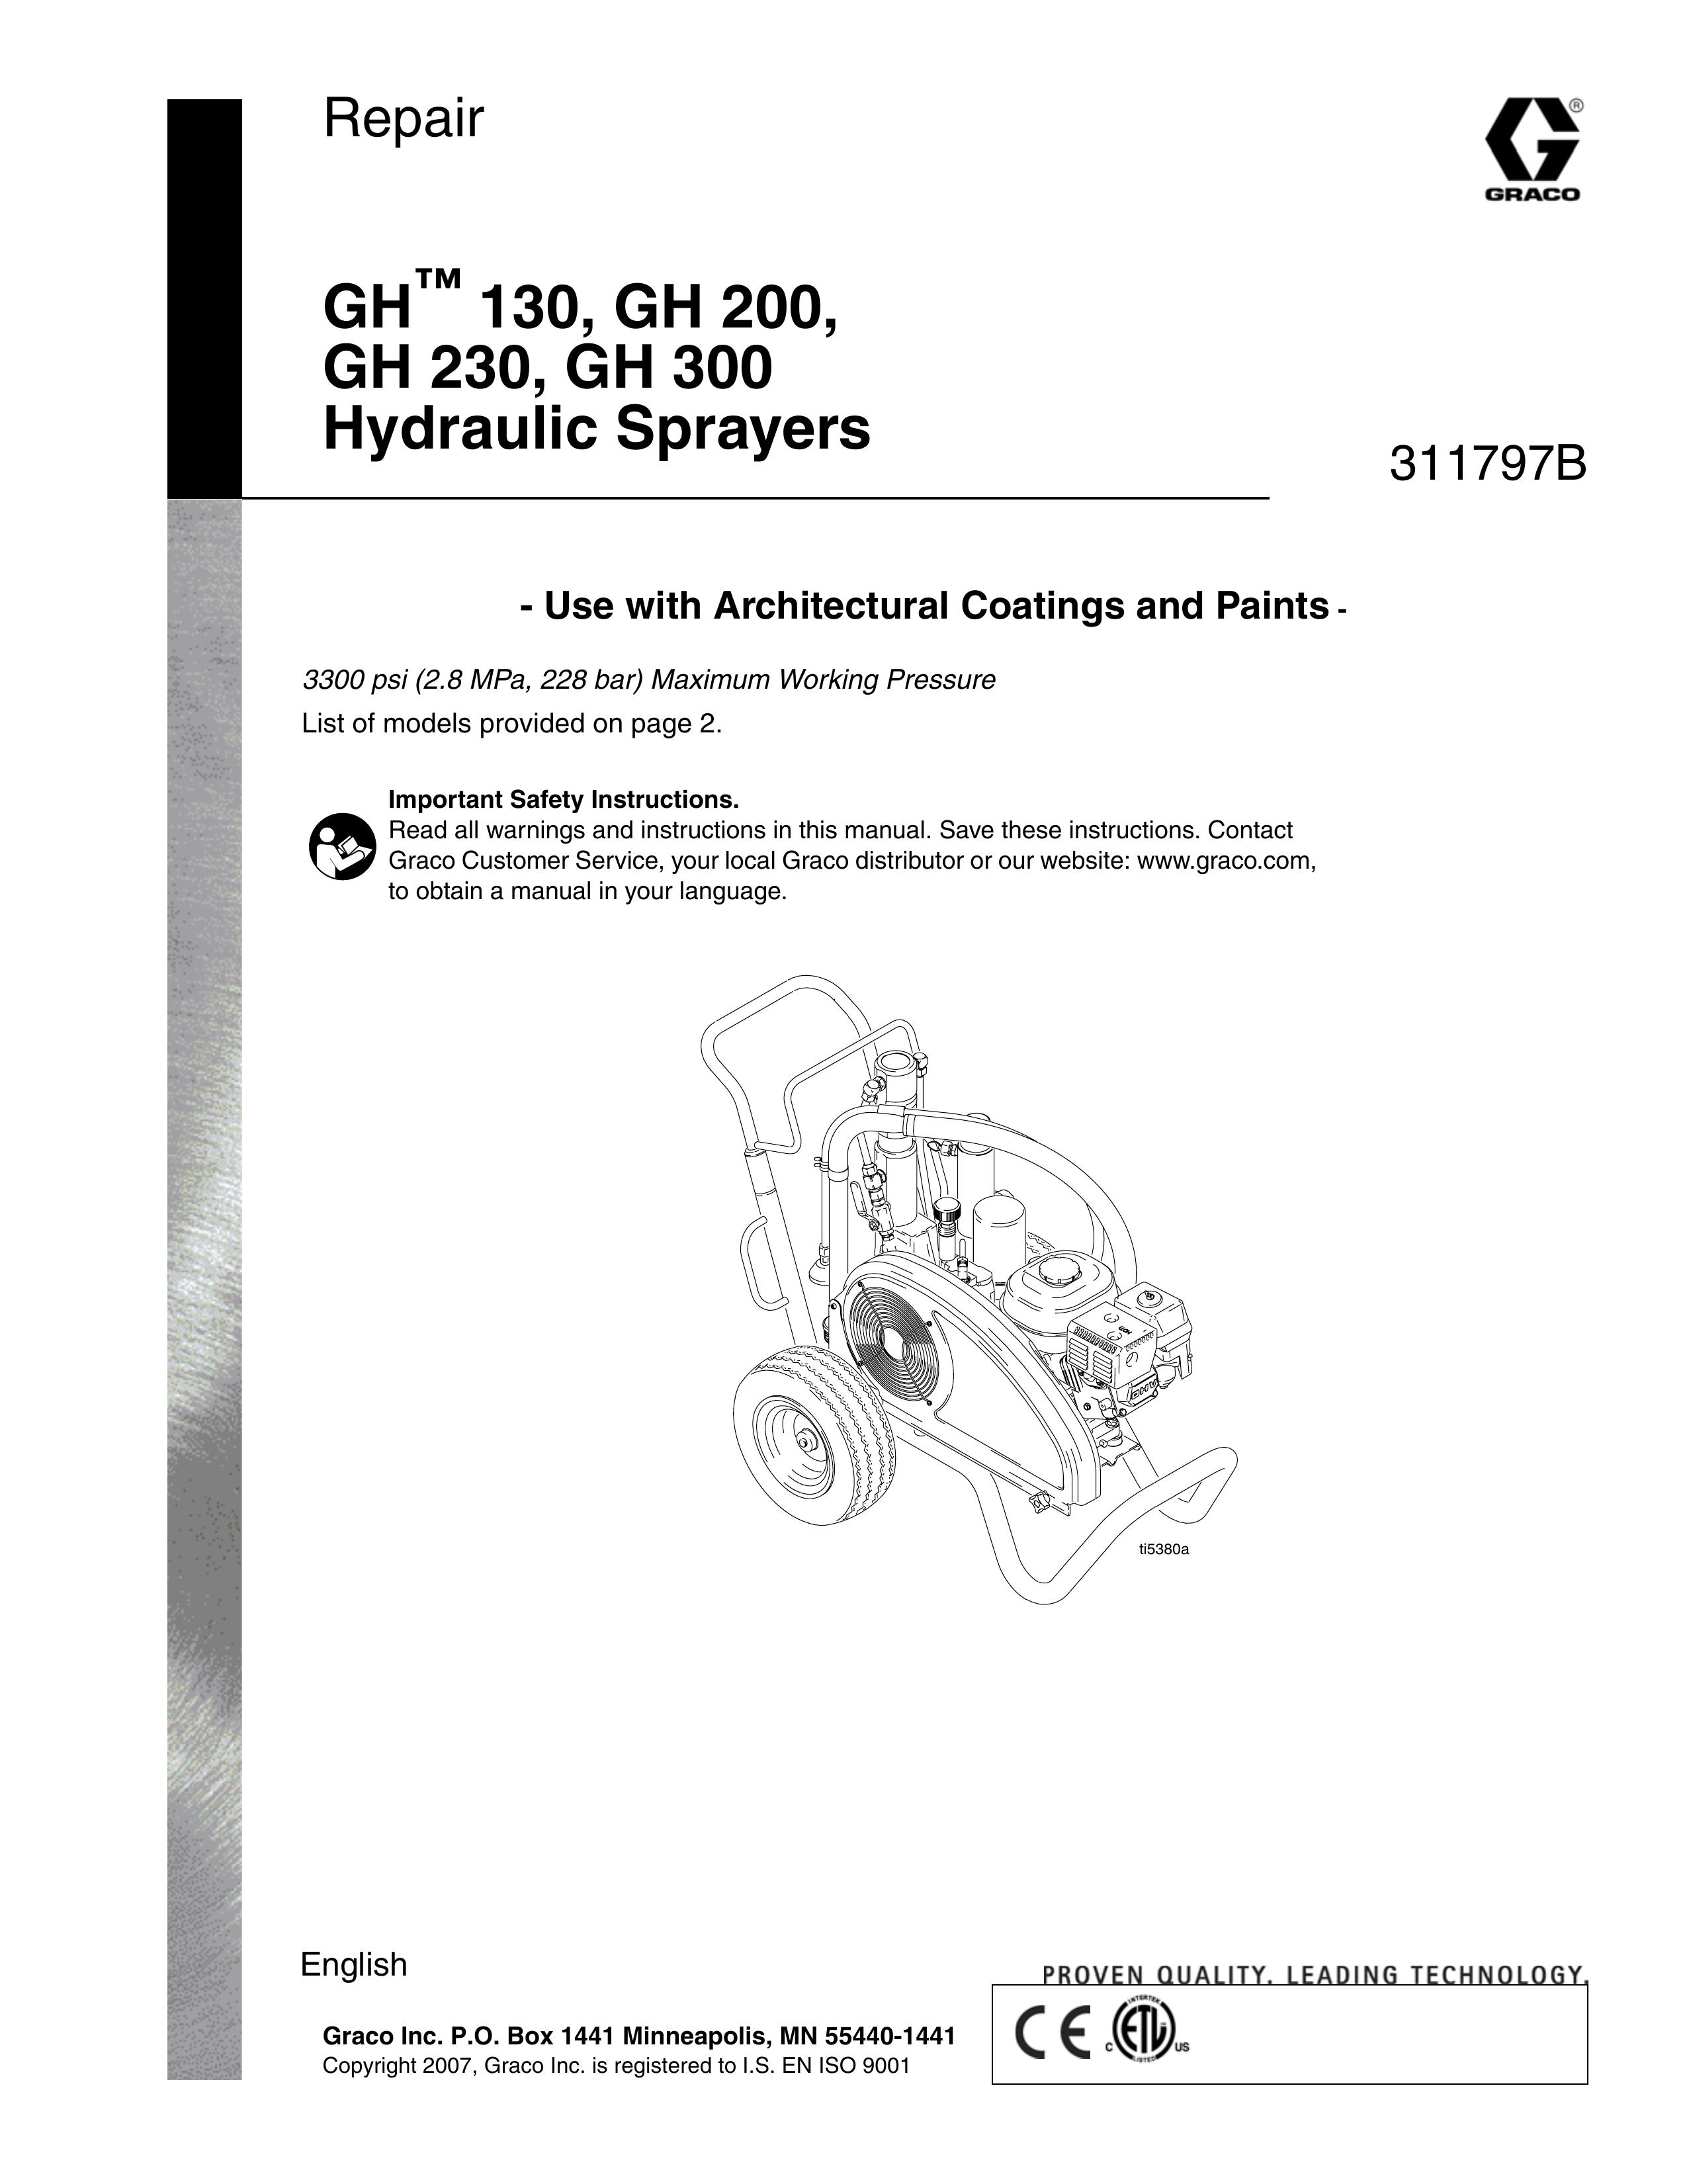 Uniden GH 300 Lawn Mower Accessory User Manual